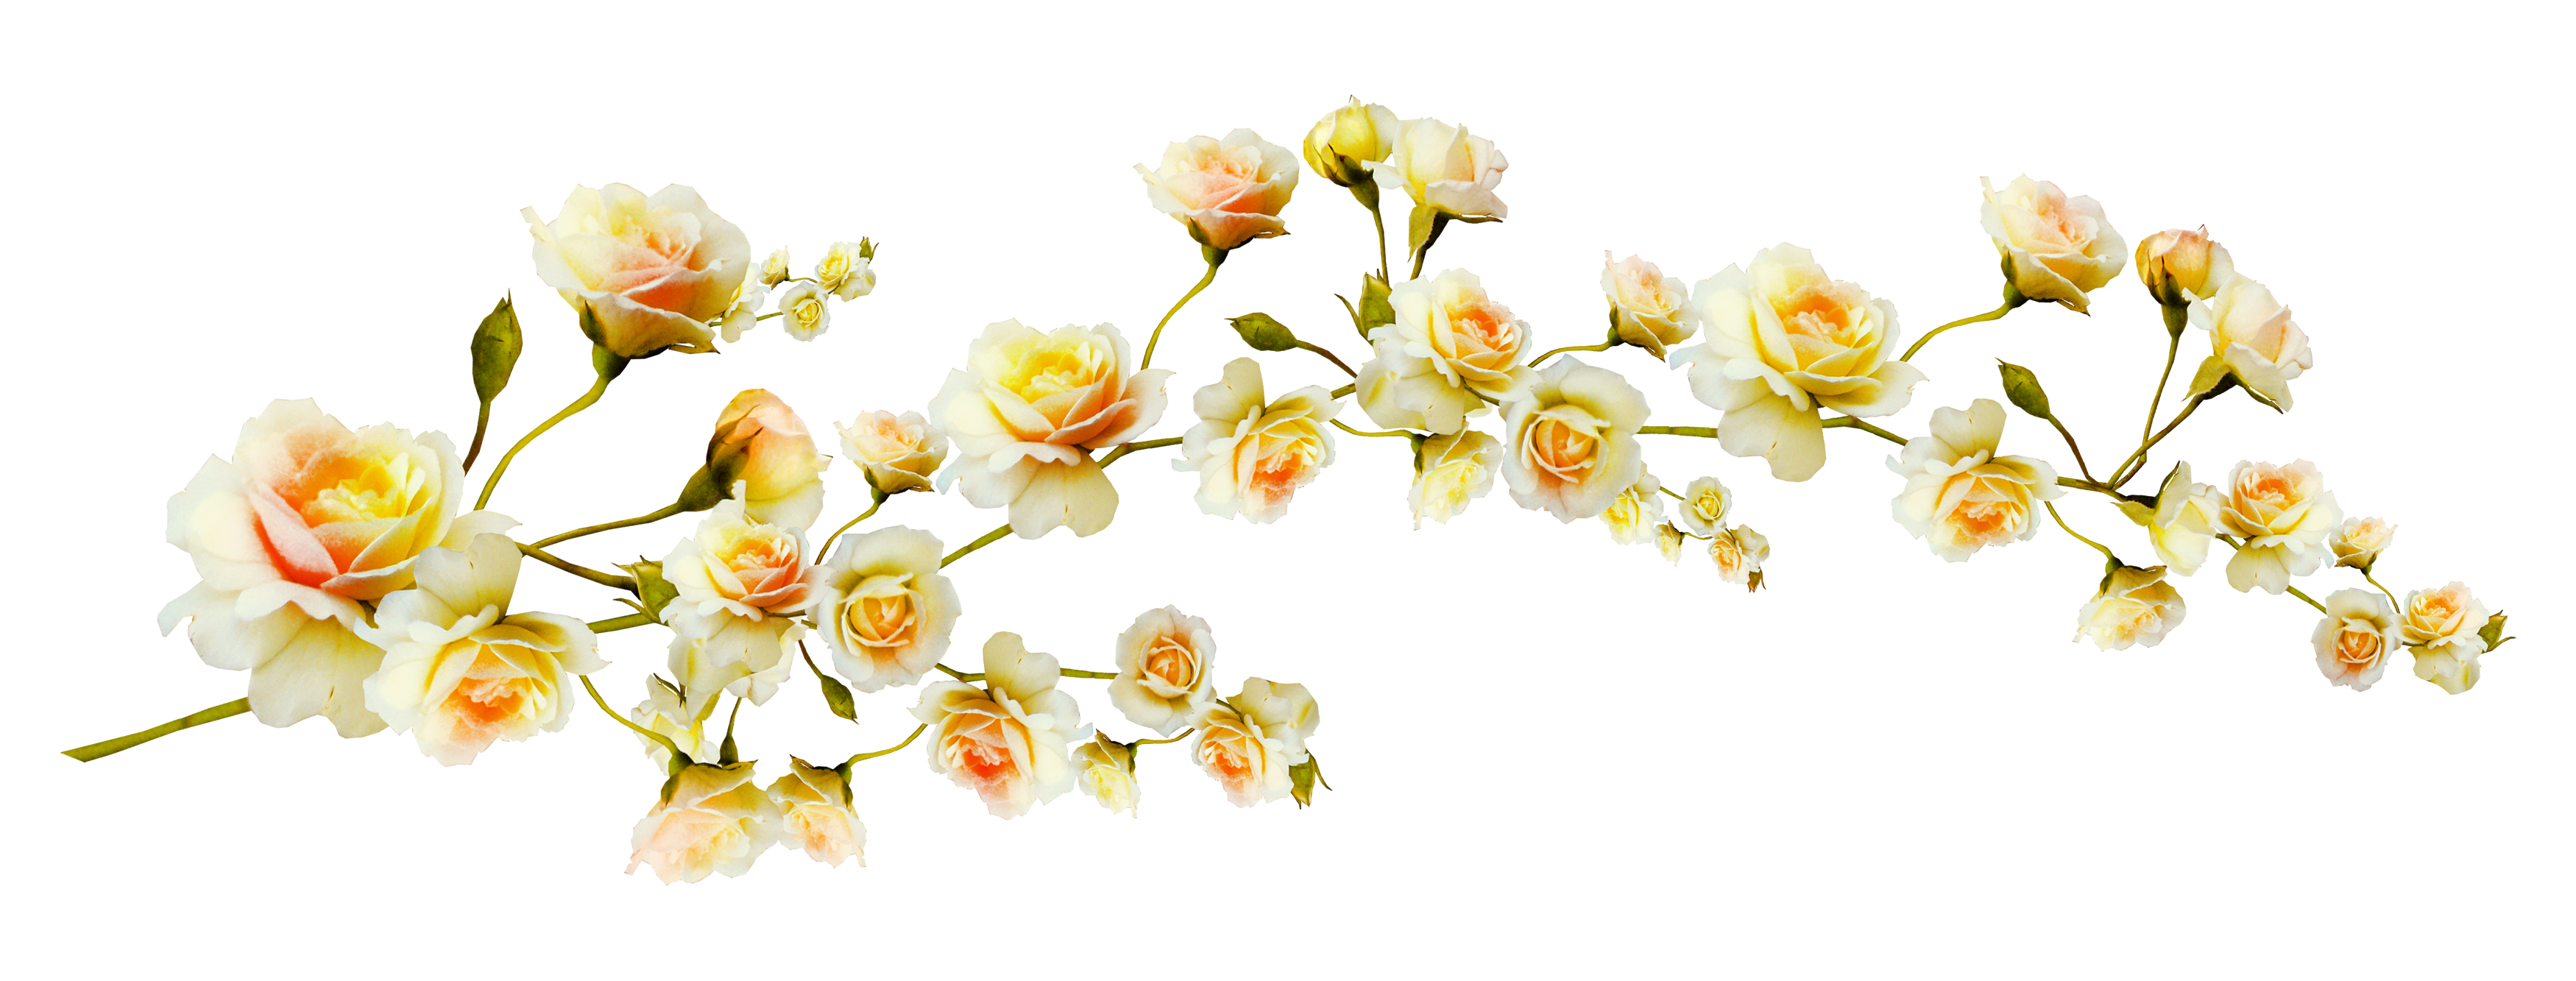 Цветы узкие на прозрачном фоне фото